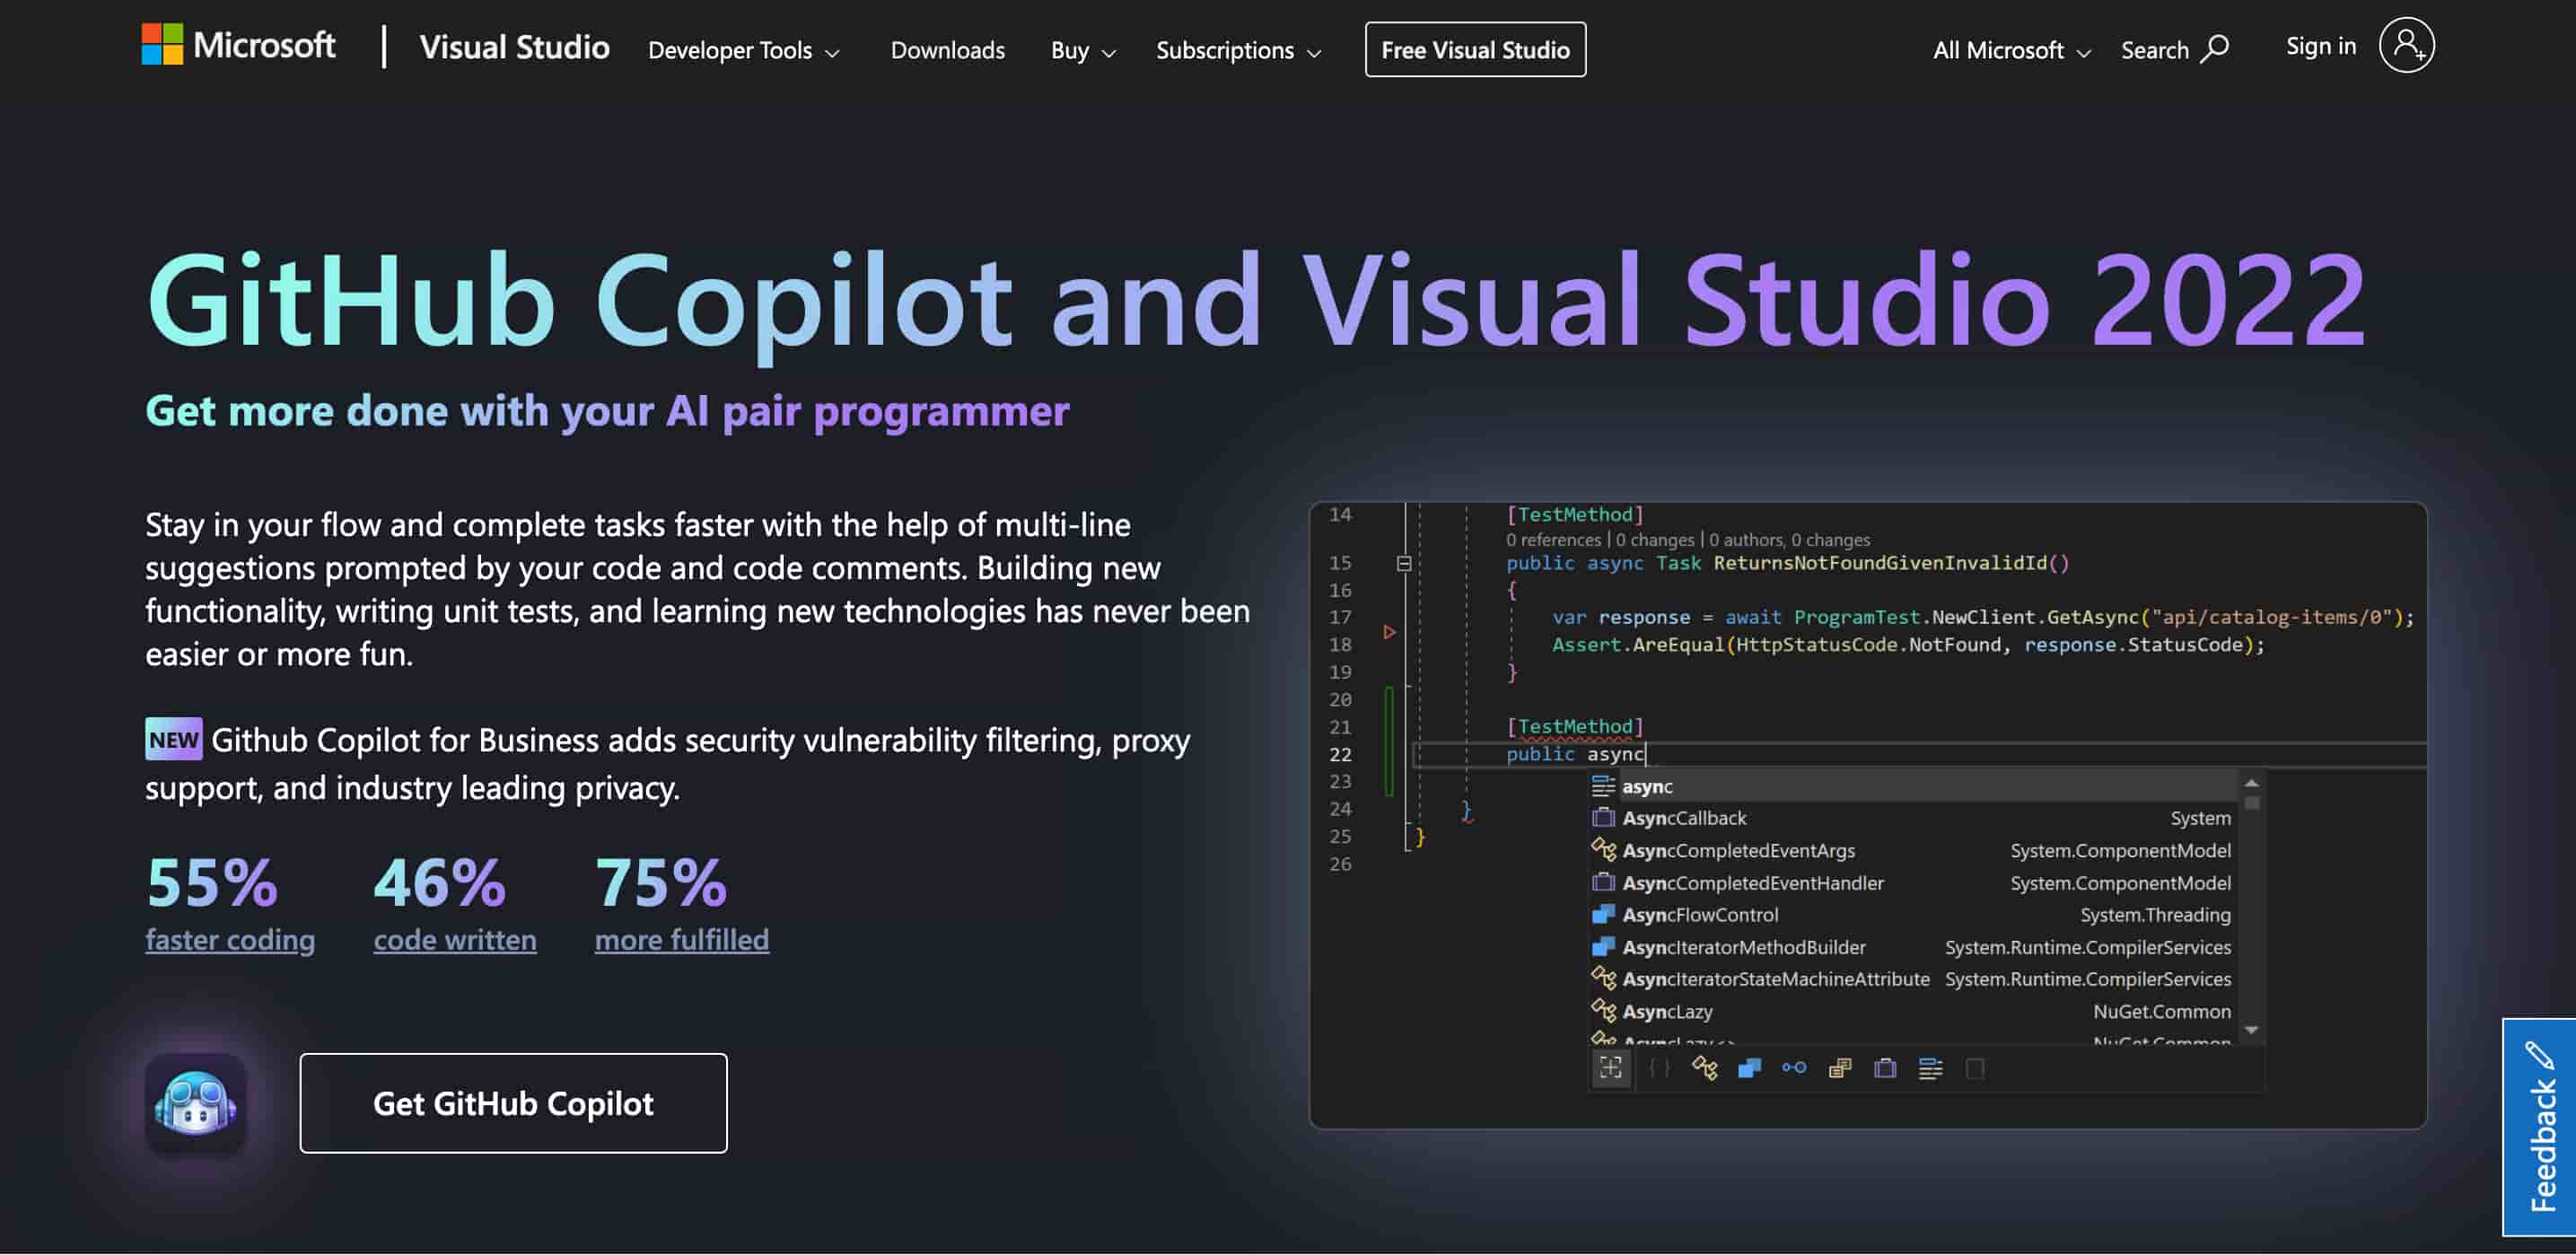 visual studio homepage